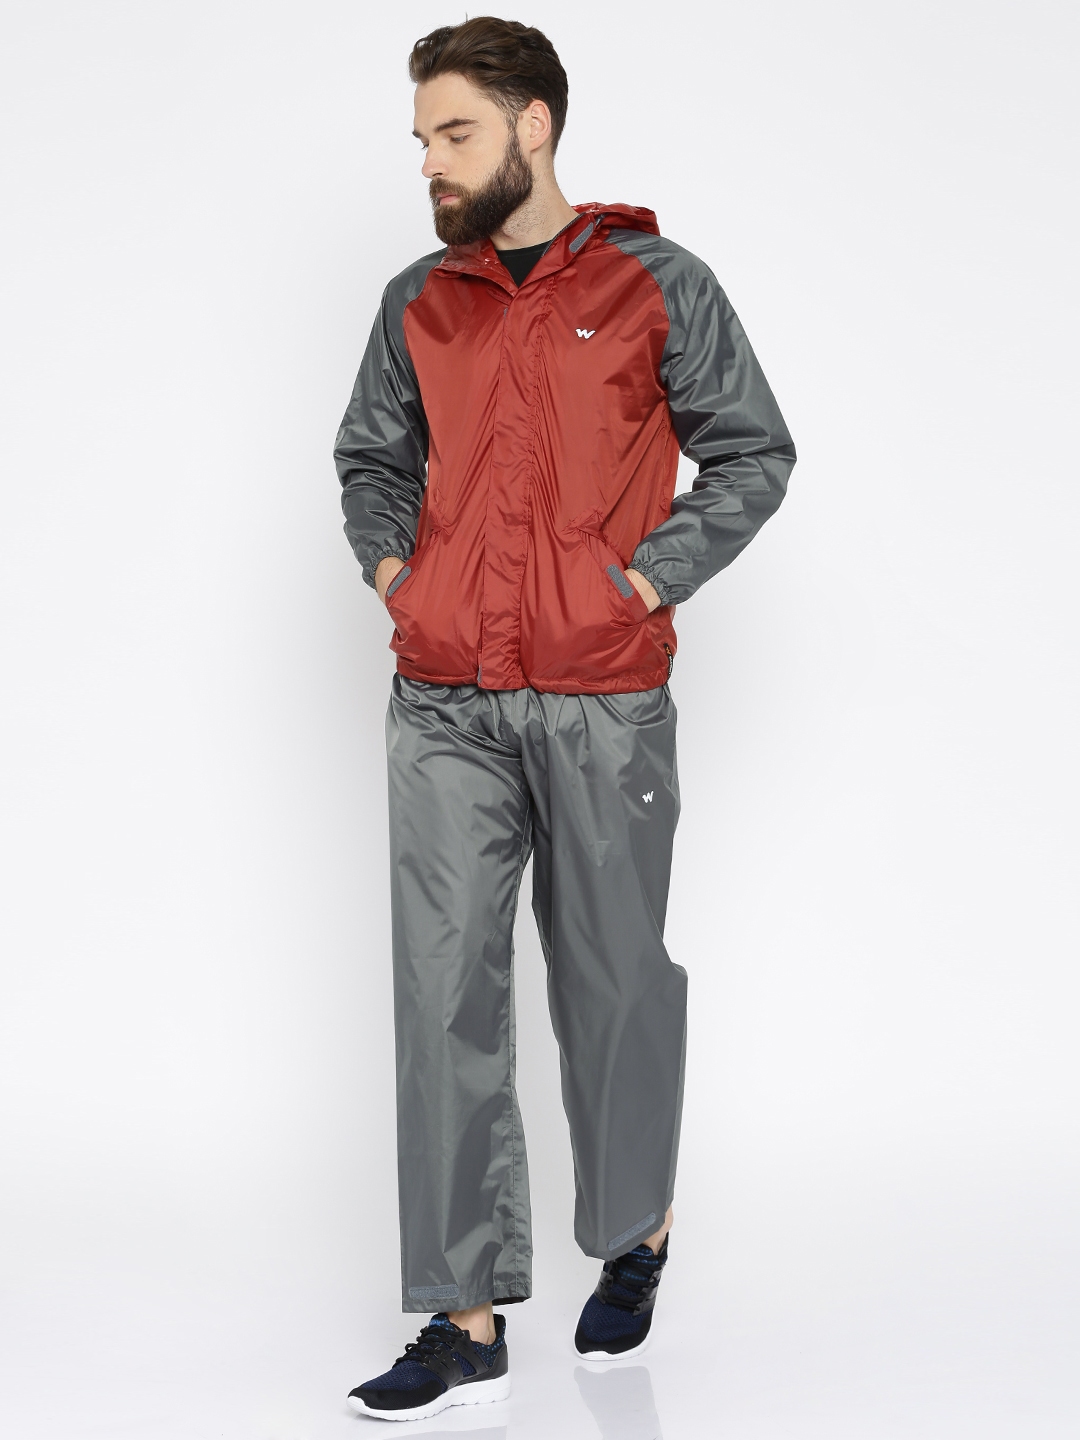 Buy Rupa Mens Comfort PVC Raincoat with Pants  Storage Bag  MulticolorLarge at Amazonin